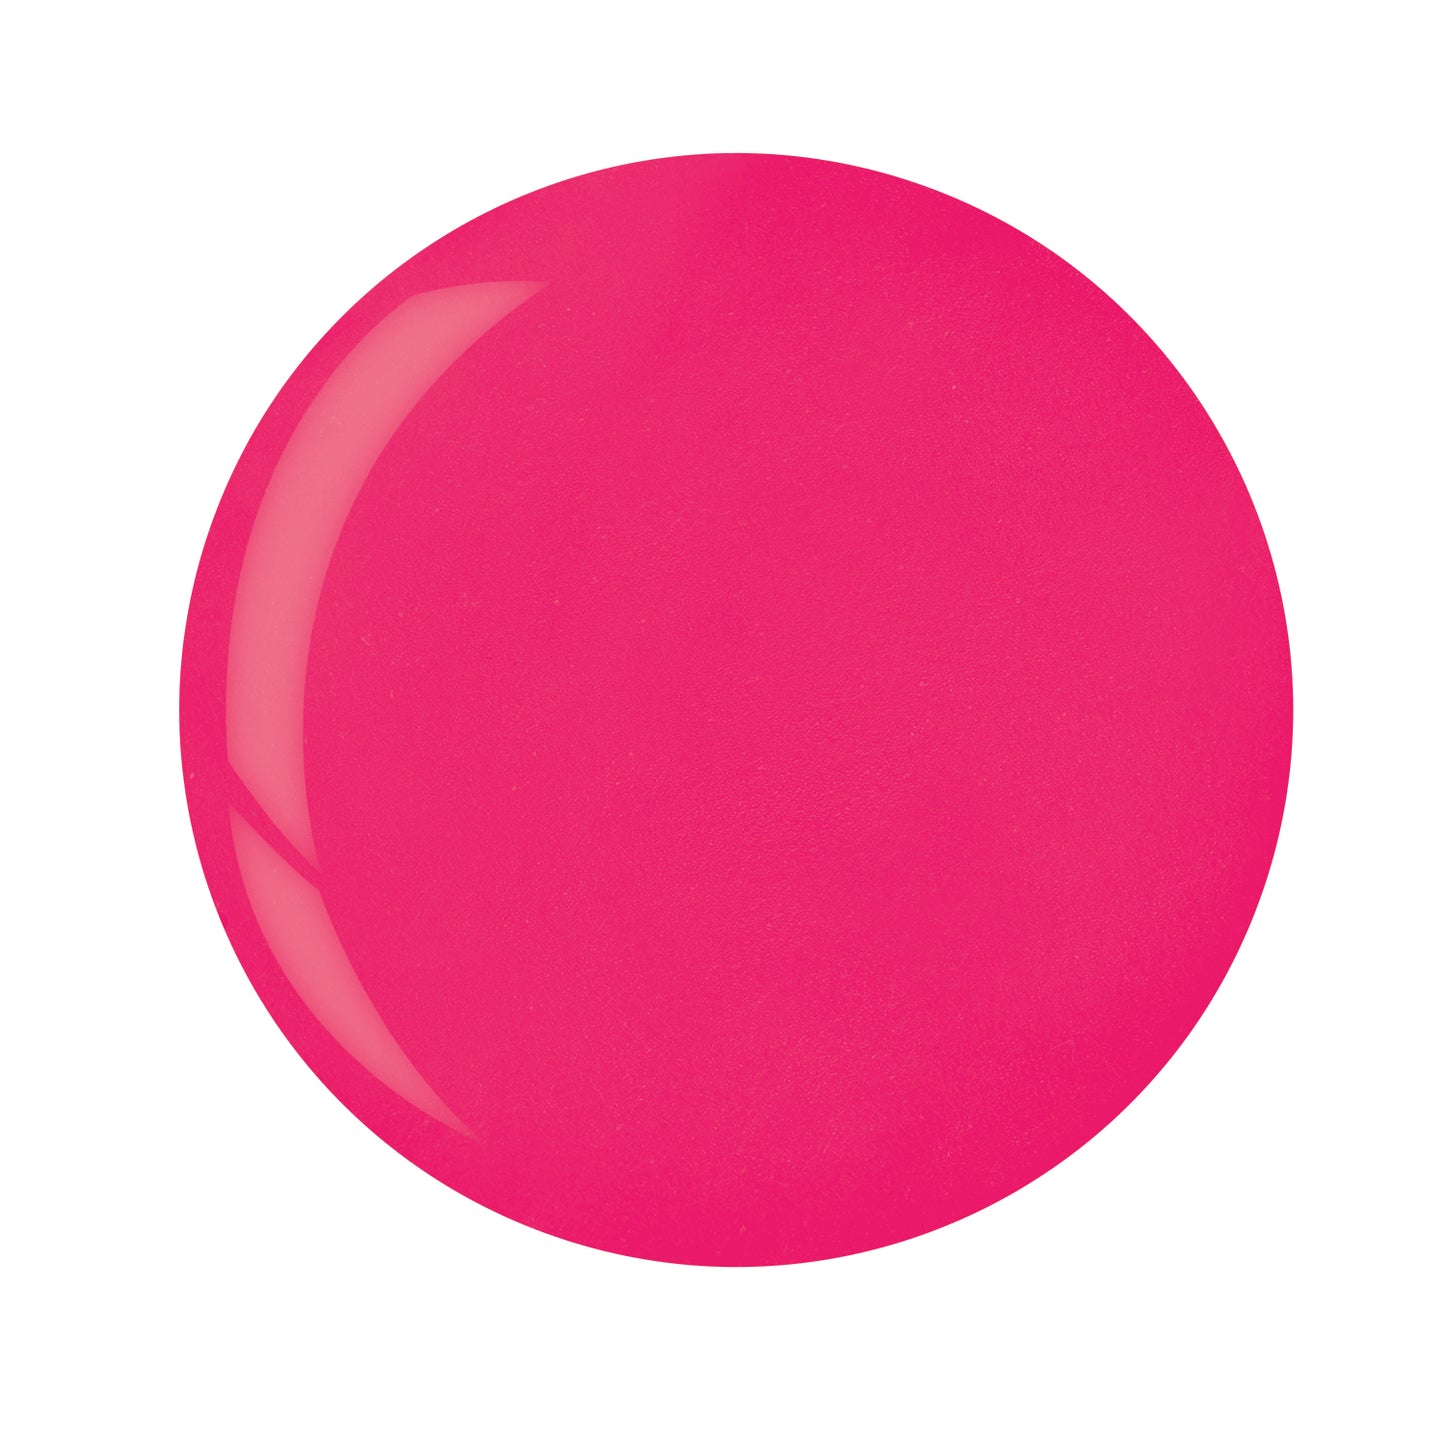 Powder Polish Neon Pink 3051 14 g